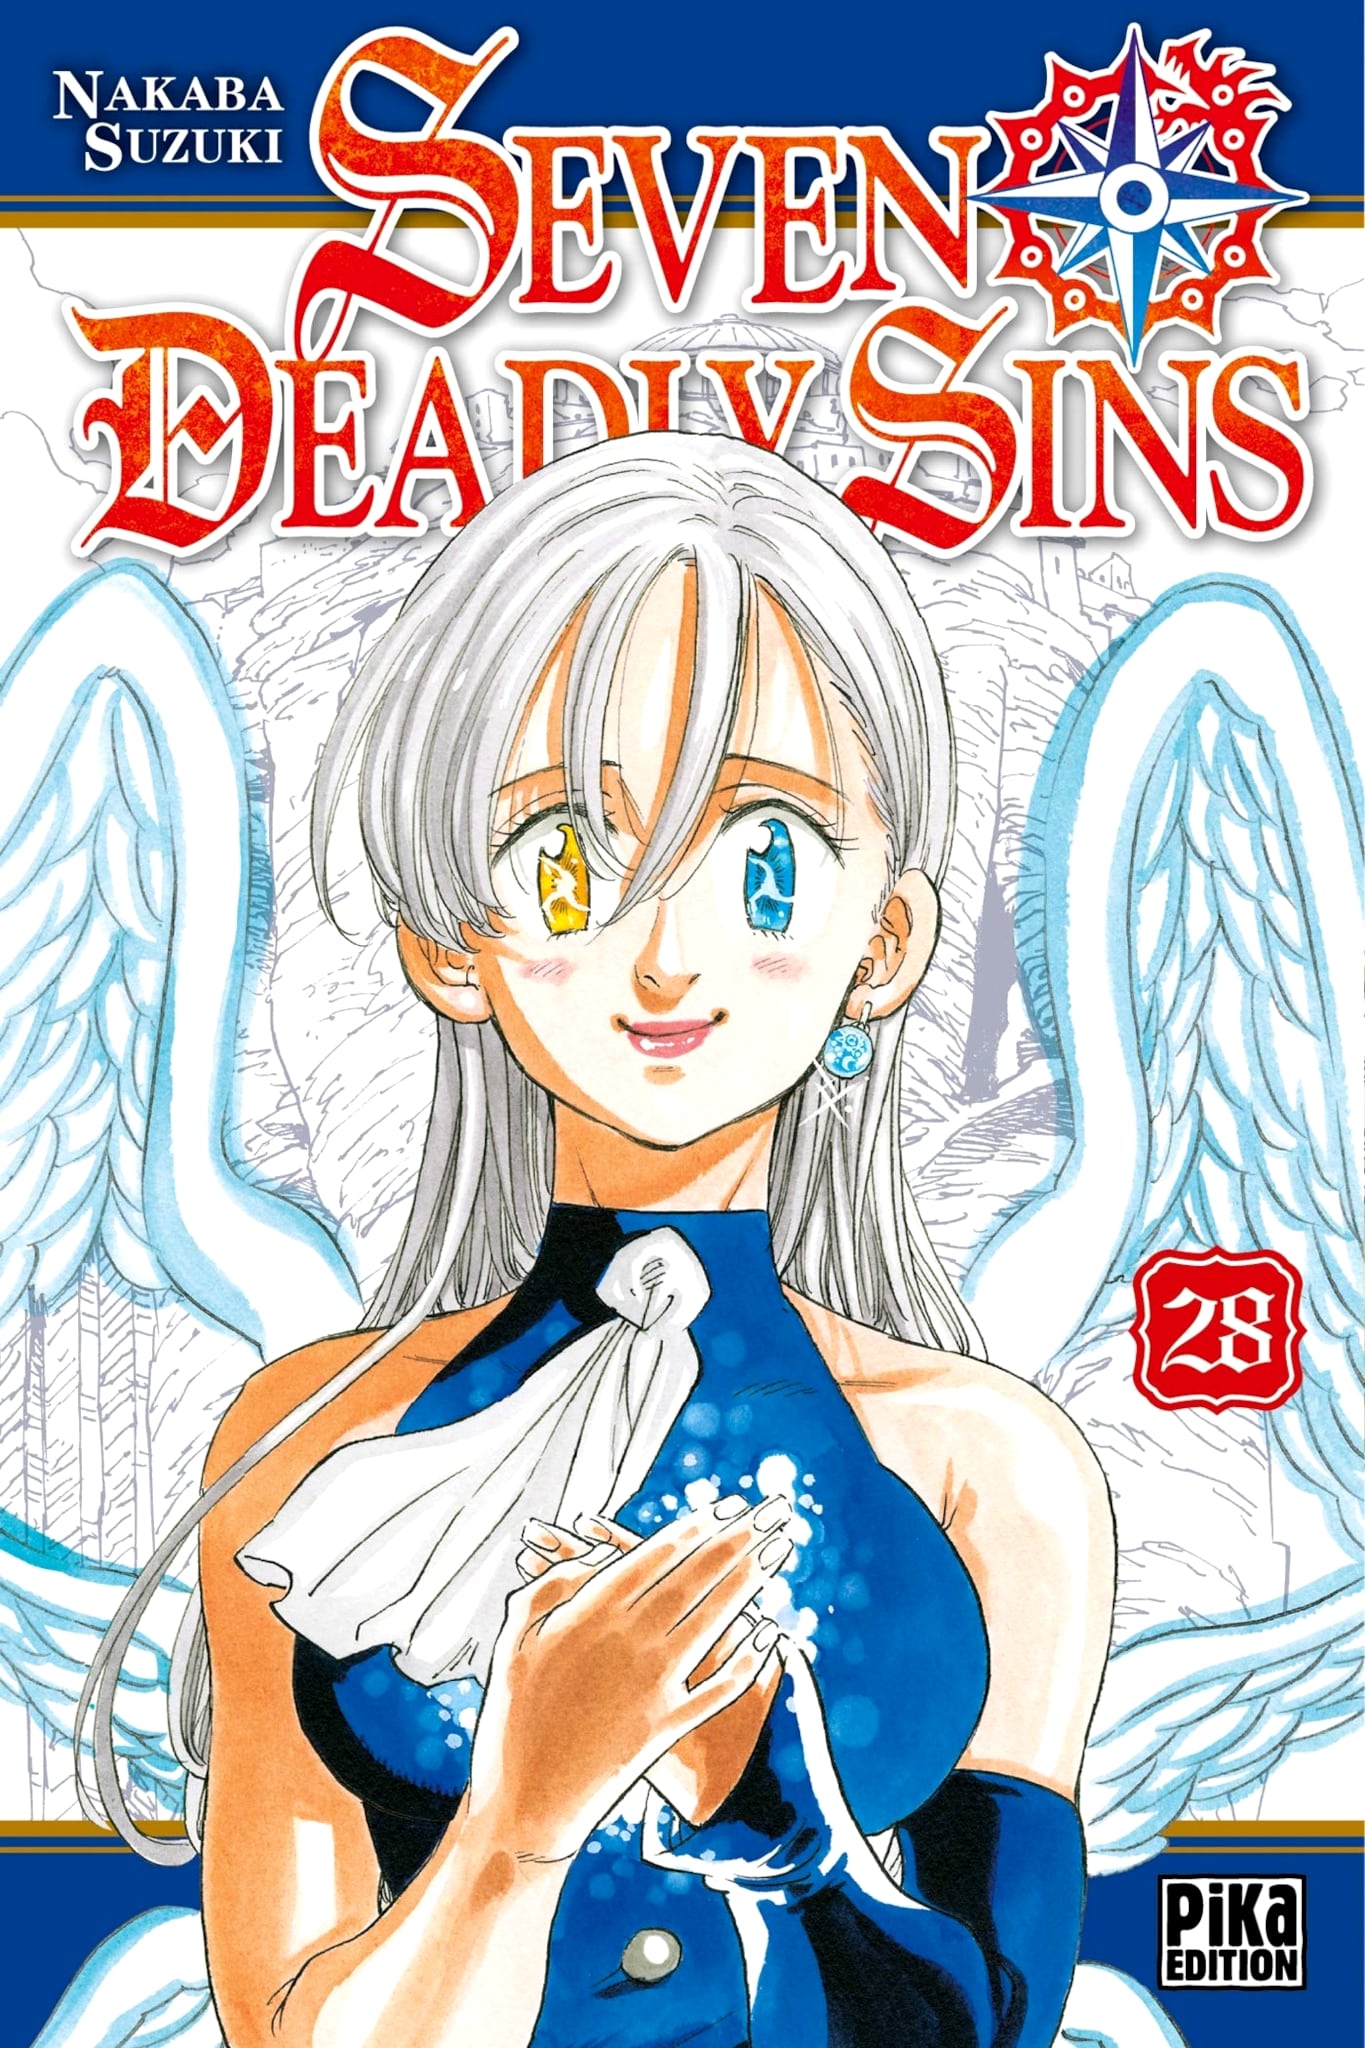 Tome 28 du manga The Seven Deadly Sins